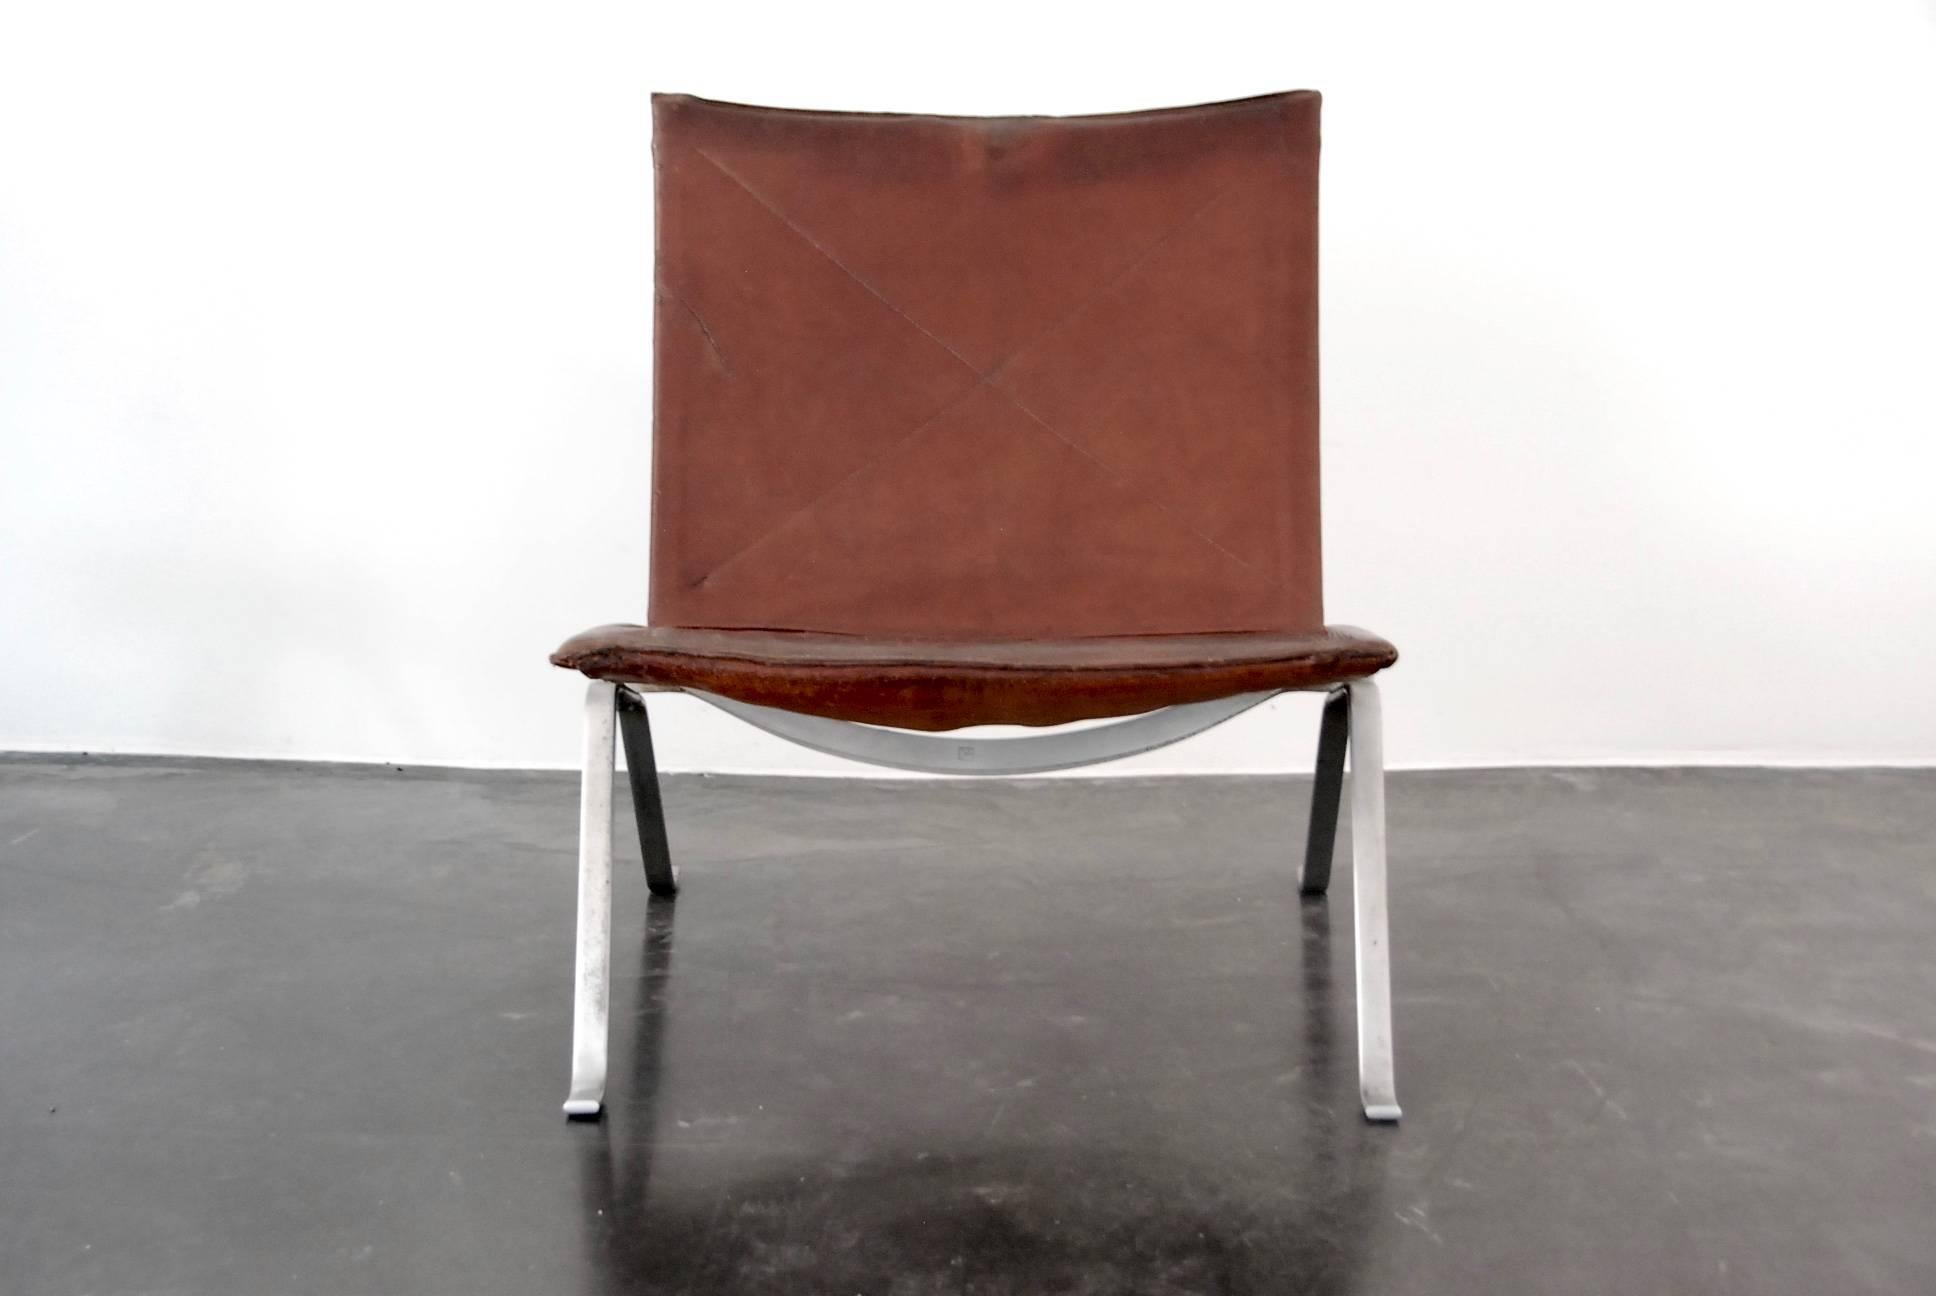 Poul Kjærholm PK22 lounge chair for E. Kold Christensen, first edition, Denmark, 1956. All original condition, leather original patina deep cognac color.